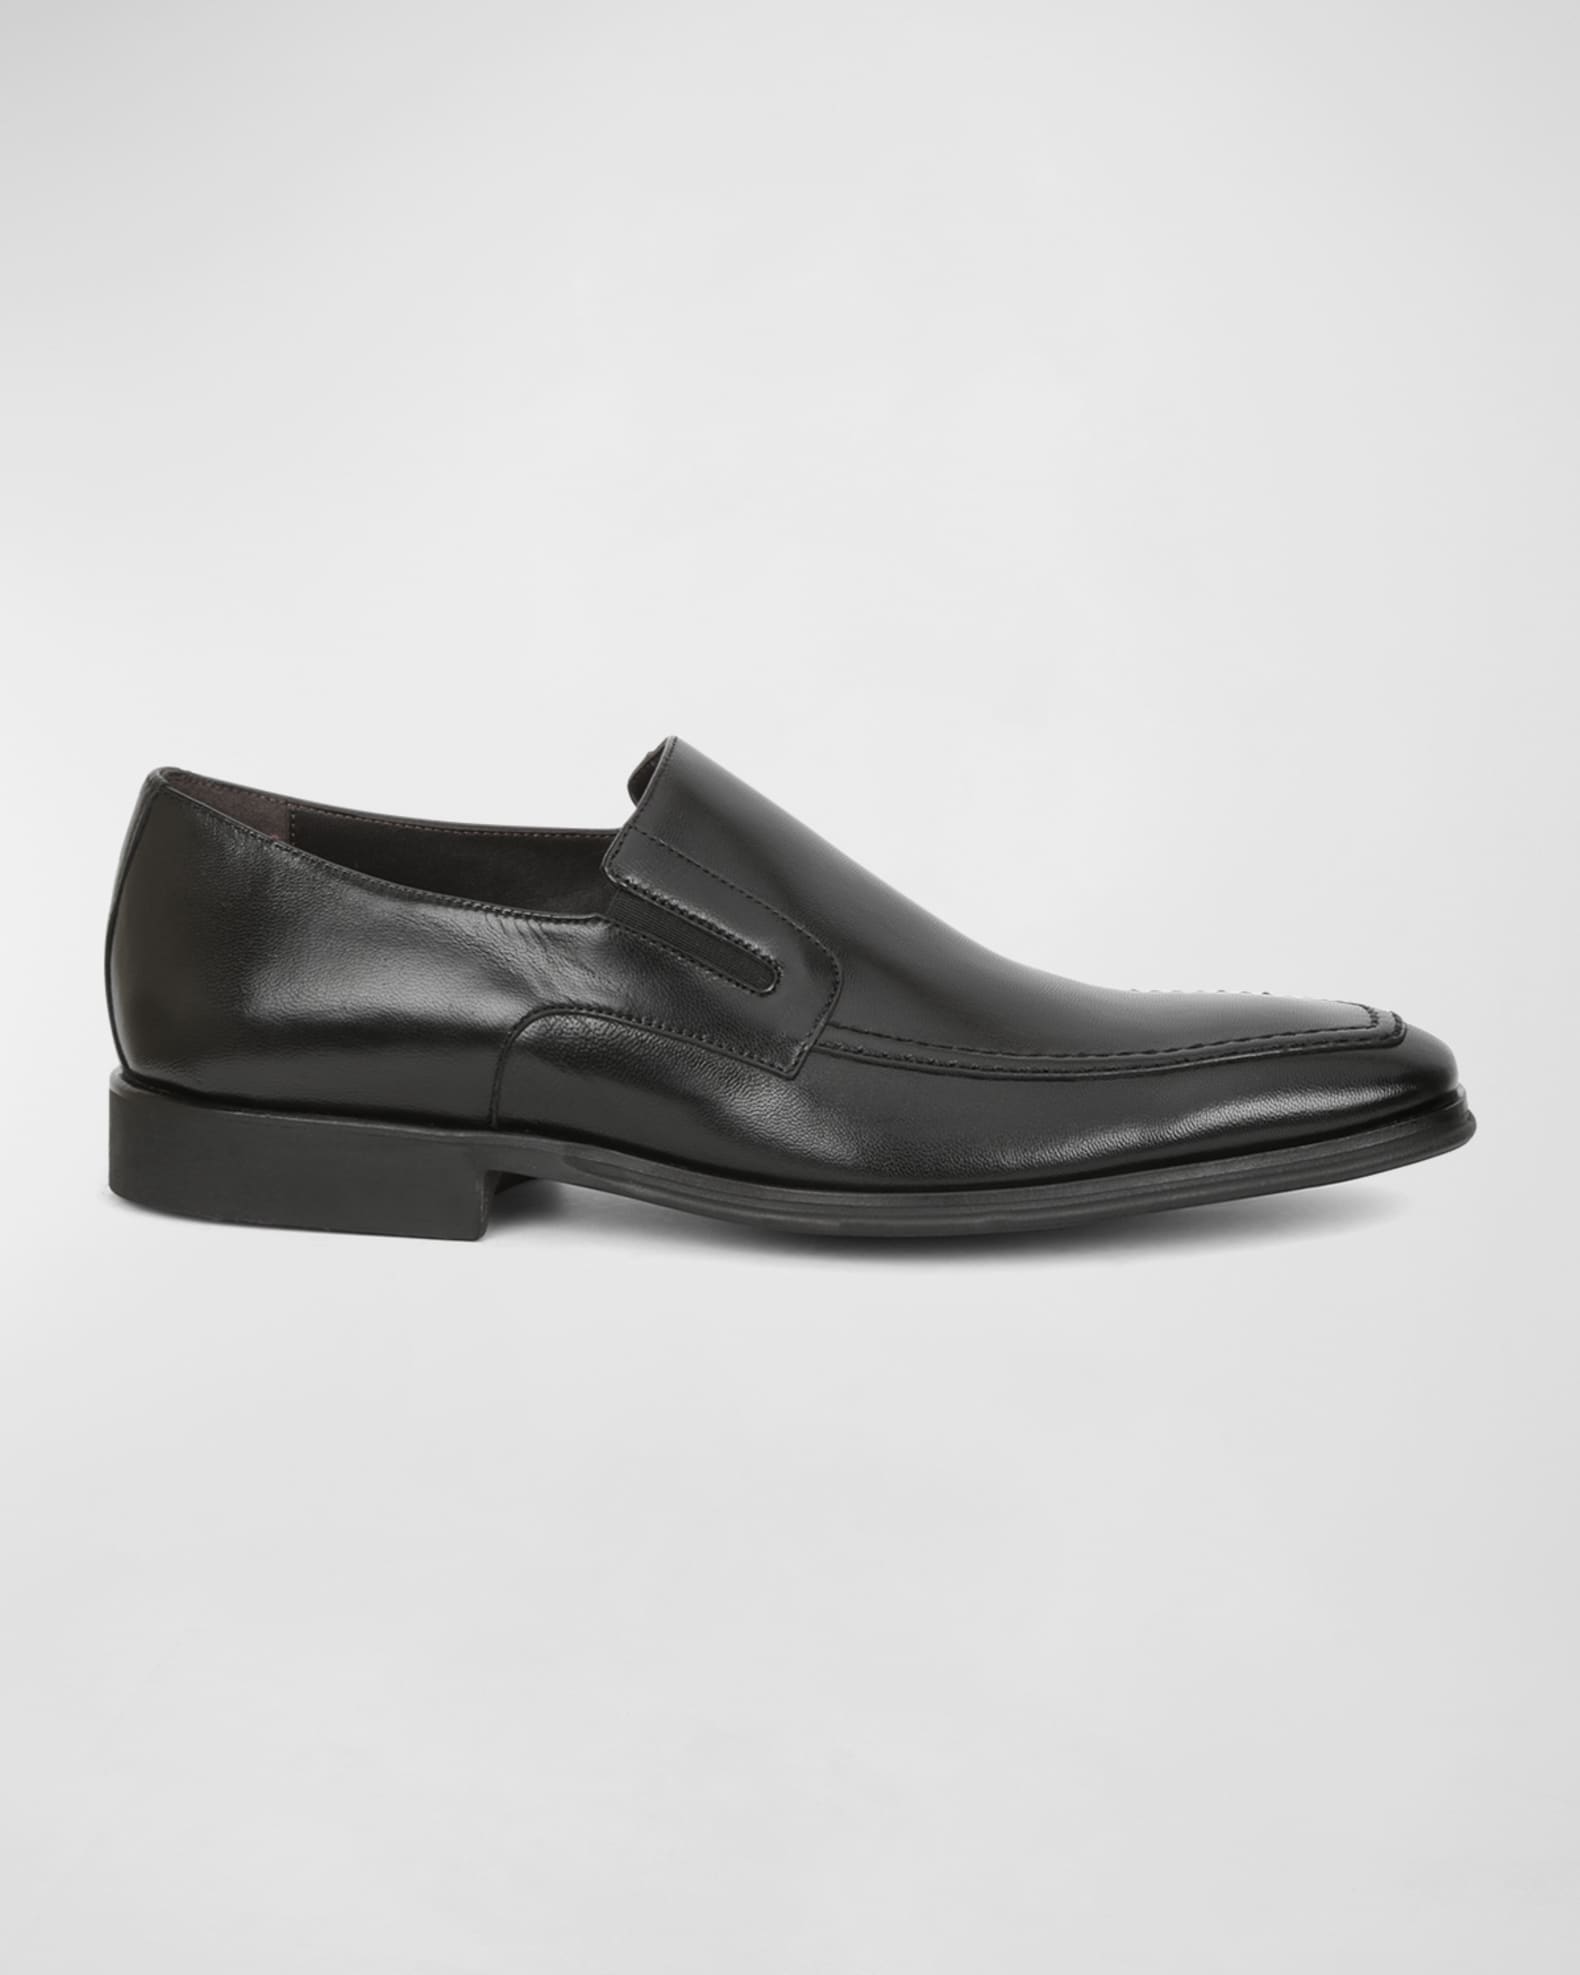 Bruno Magli Men's Raging Leather Slip-On Loafers | Neiman Marcus